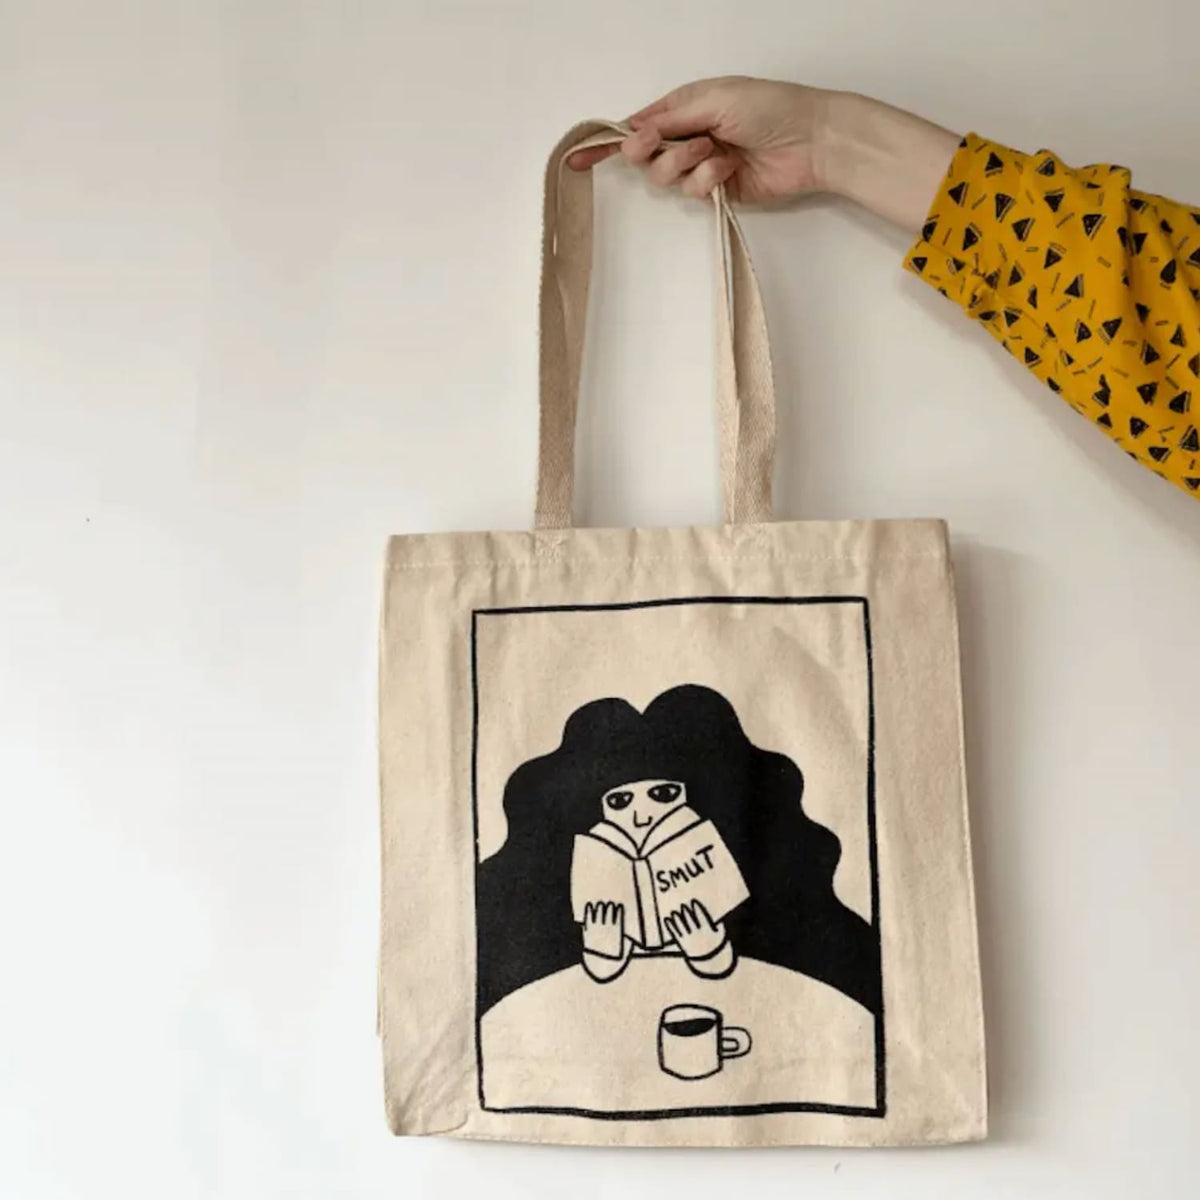 Smut Tote Bag Back Soon - Funny Gift - Illustration - Ramona